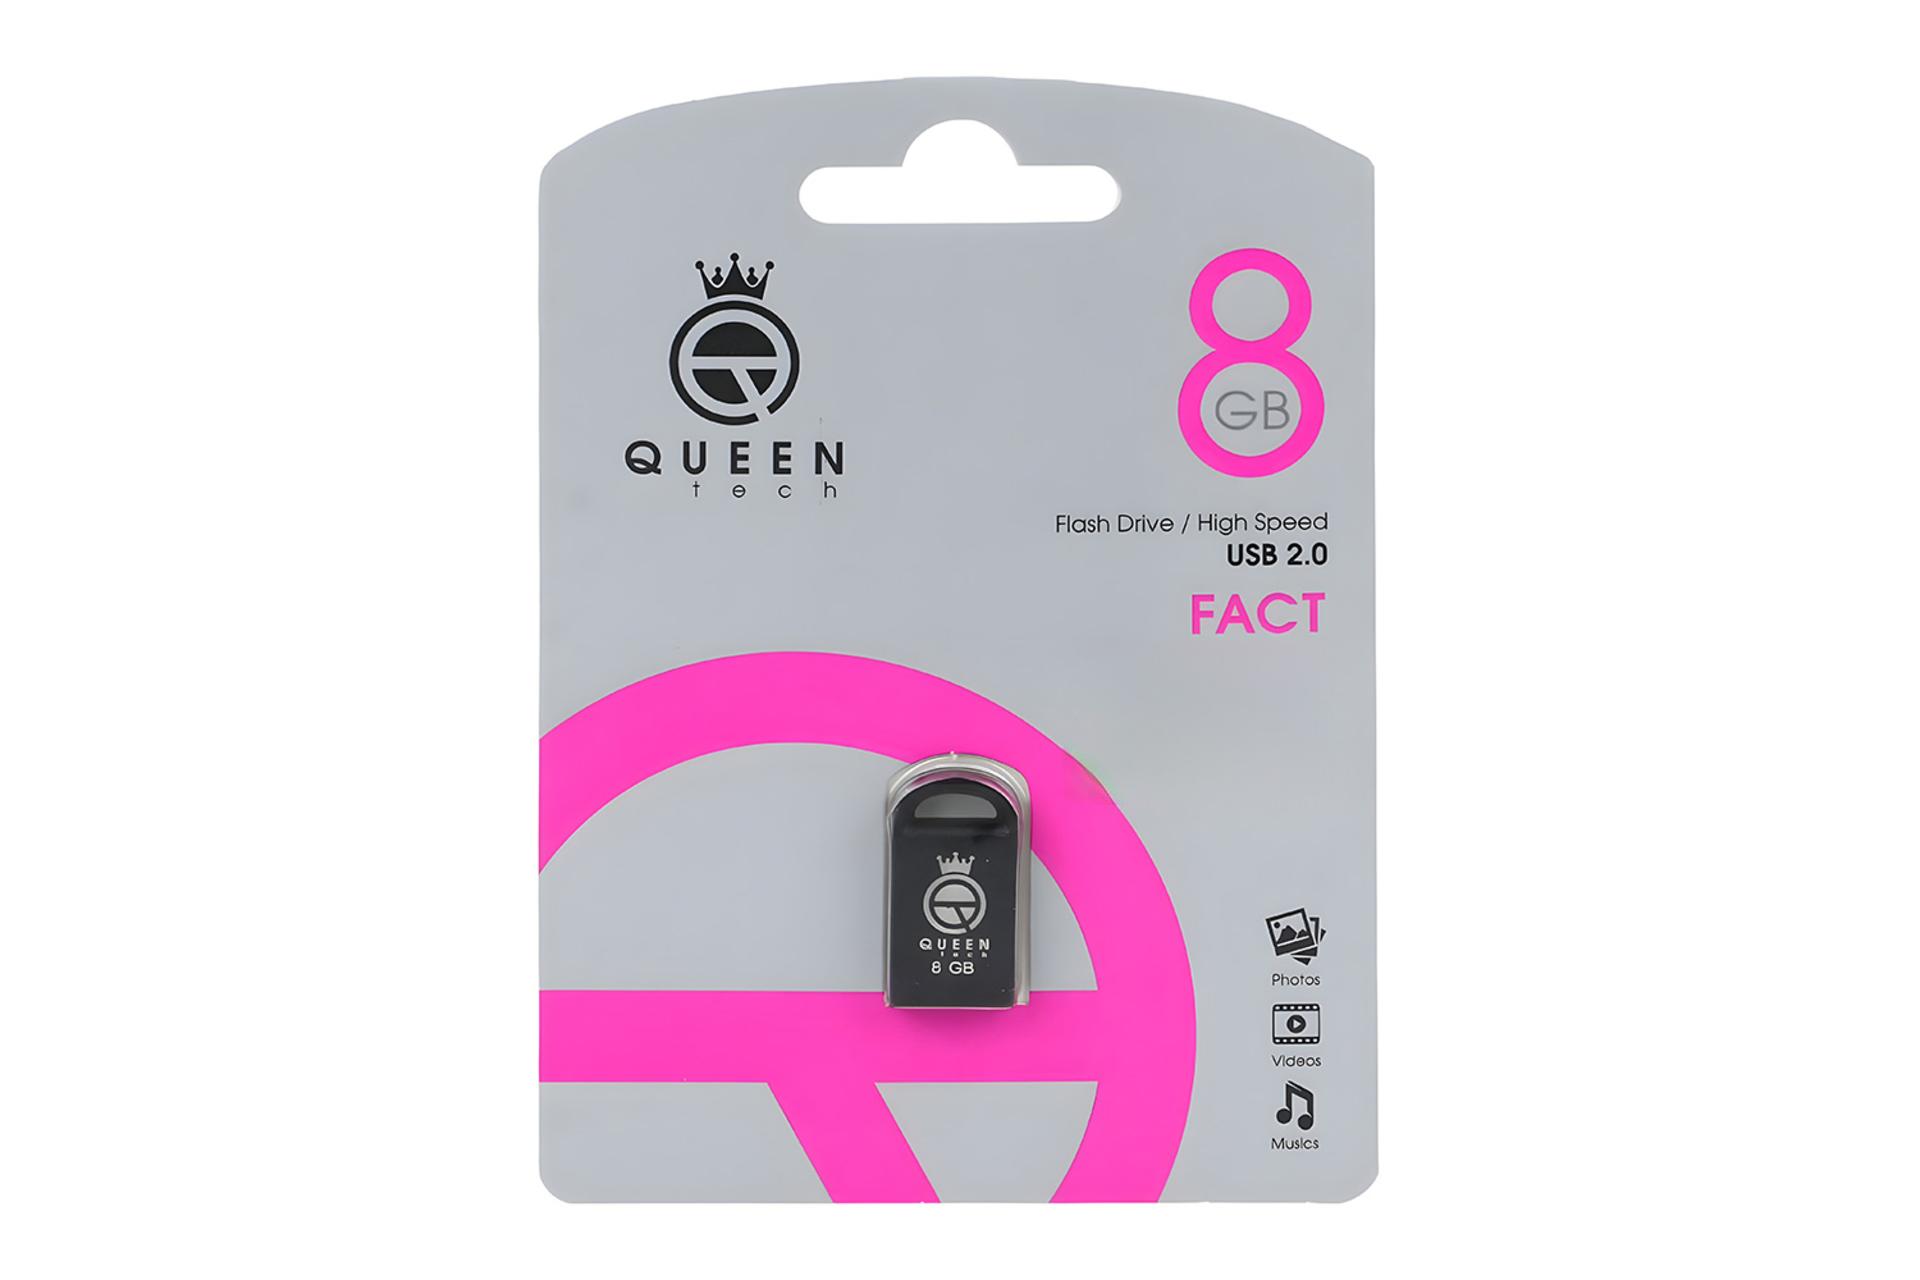 جعبه فلش مموری کوئین تک Queen Tech FACT 8GB USB 2.0